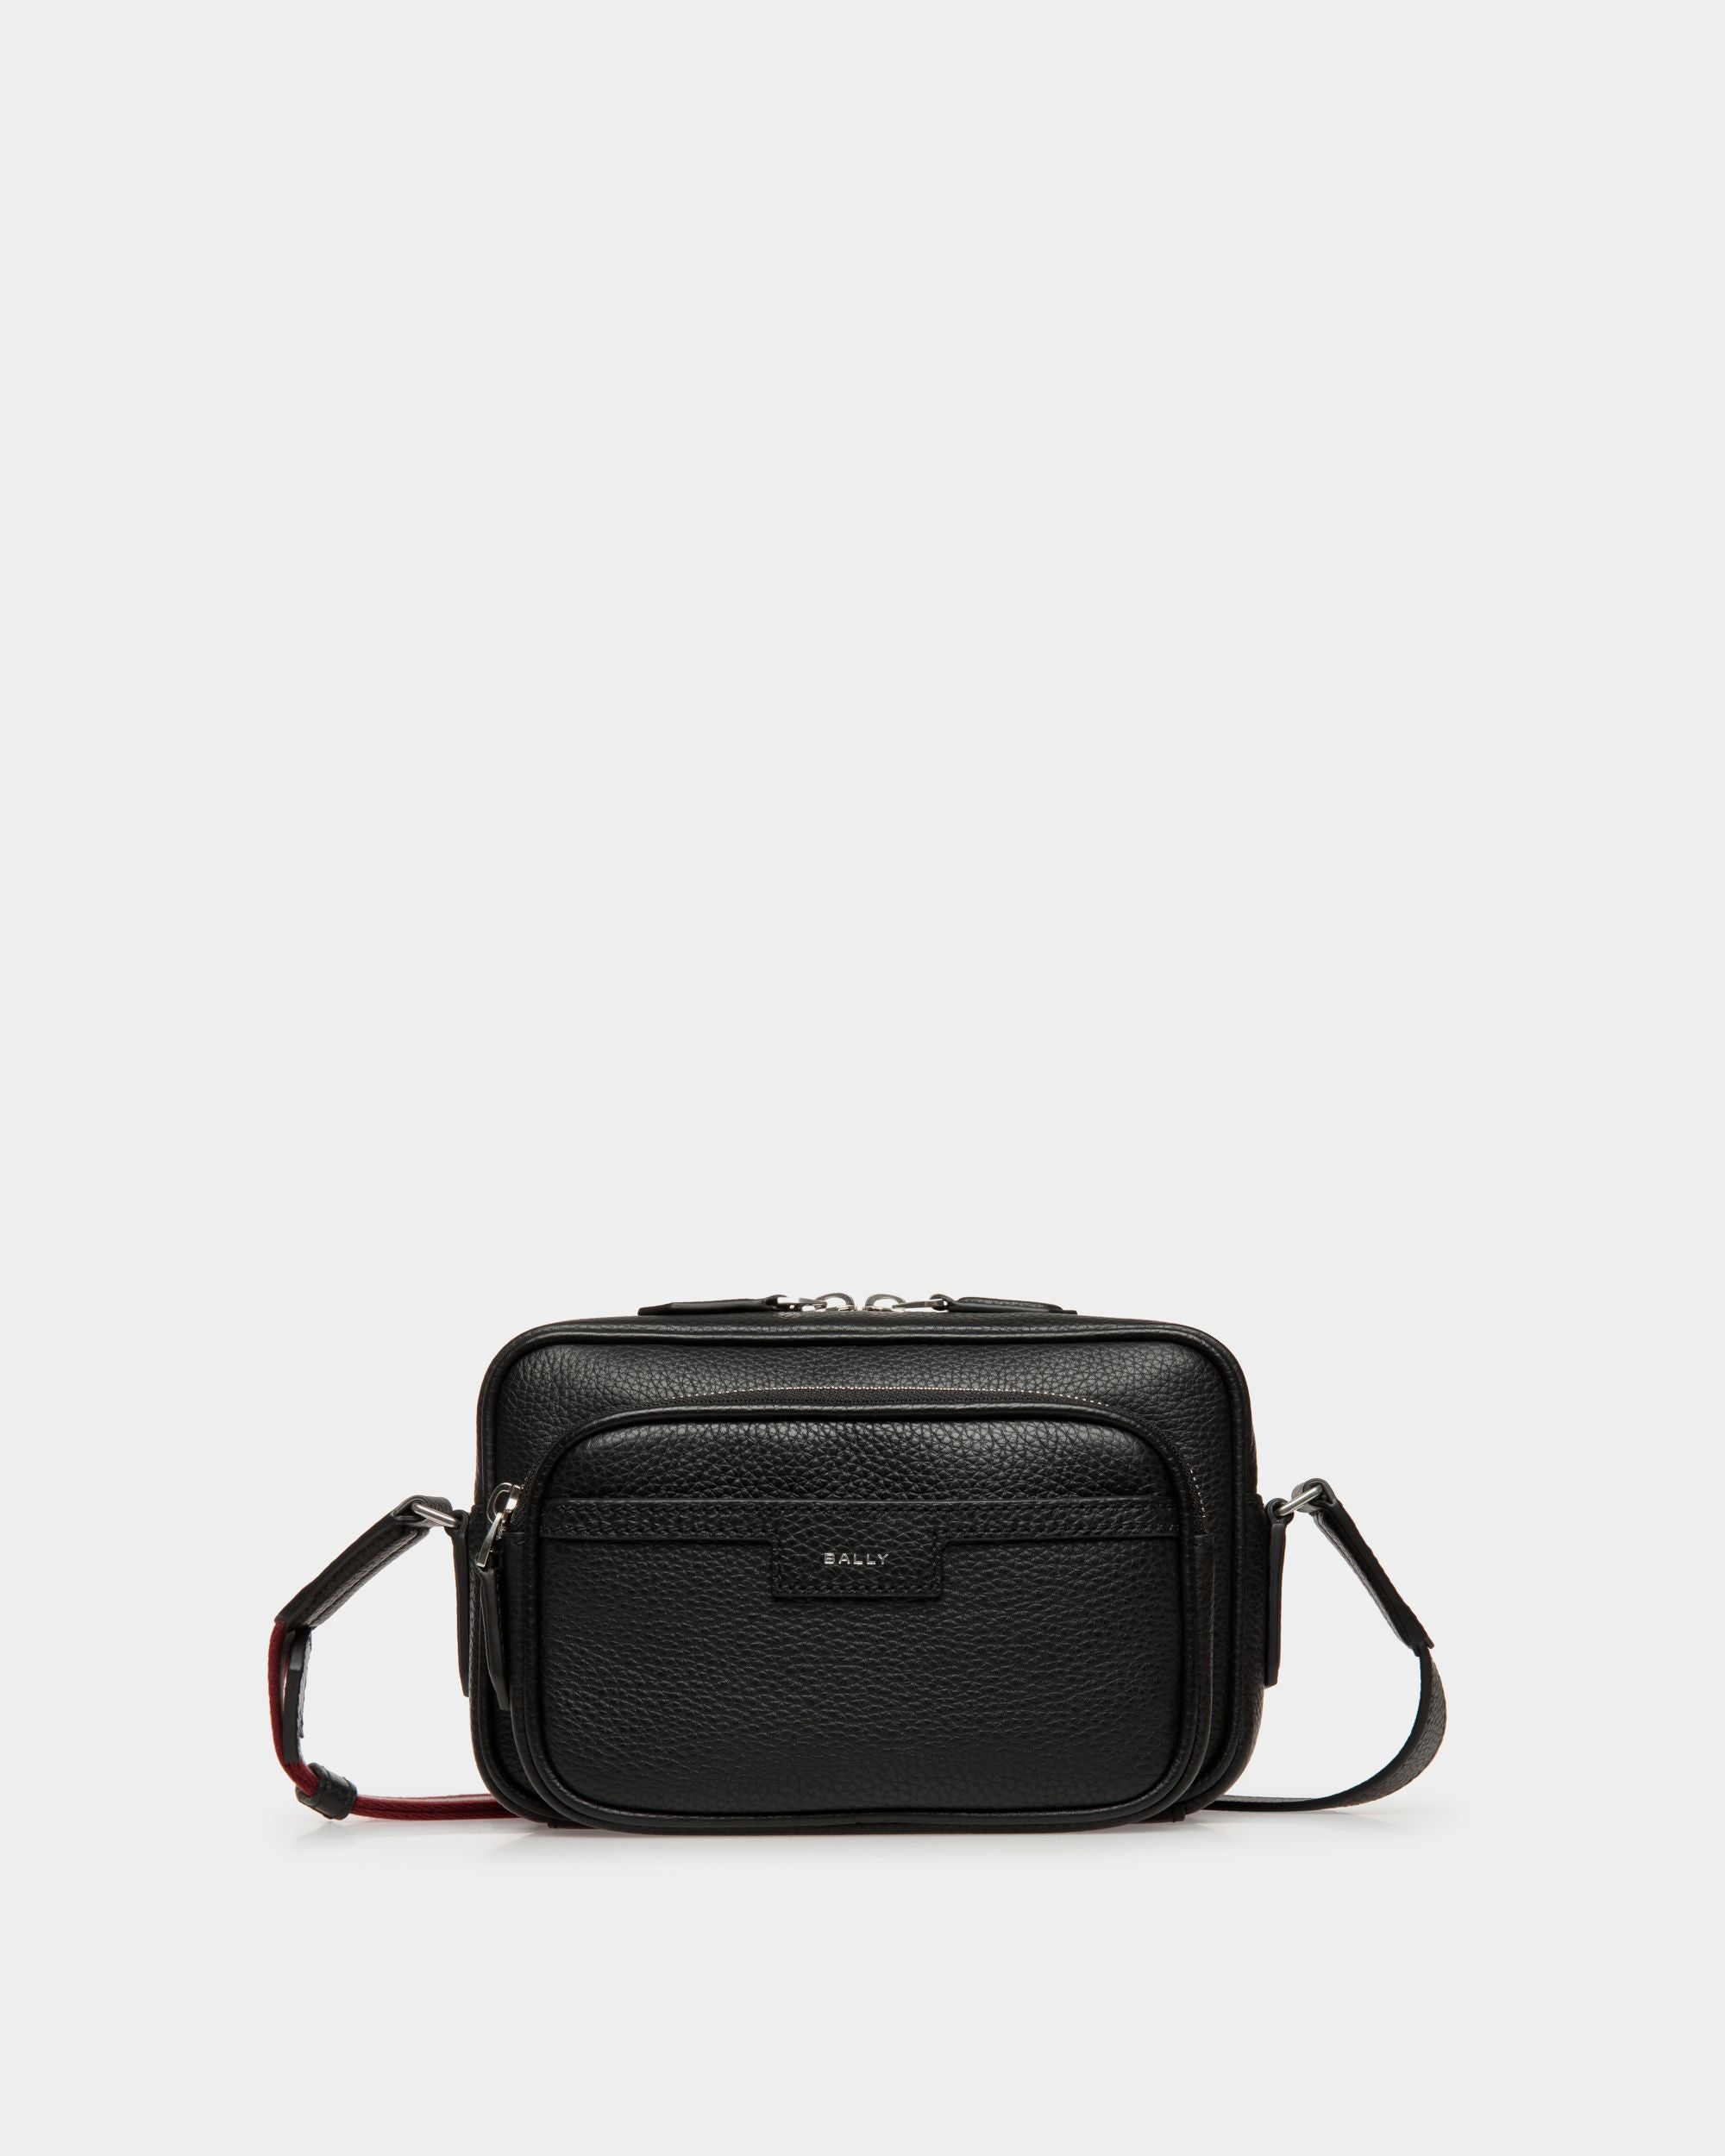 Code | Men's Crossbody Bag in Black Grained Leather | Bally | Still Life Front